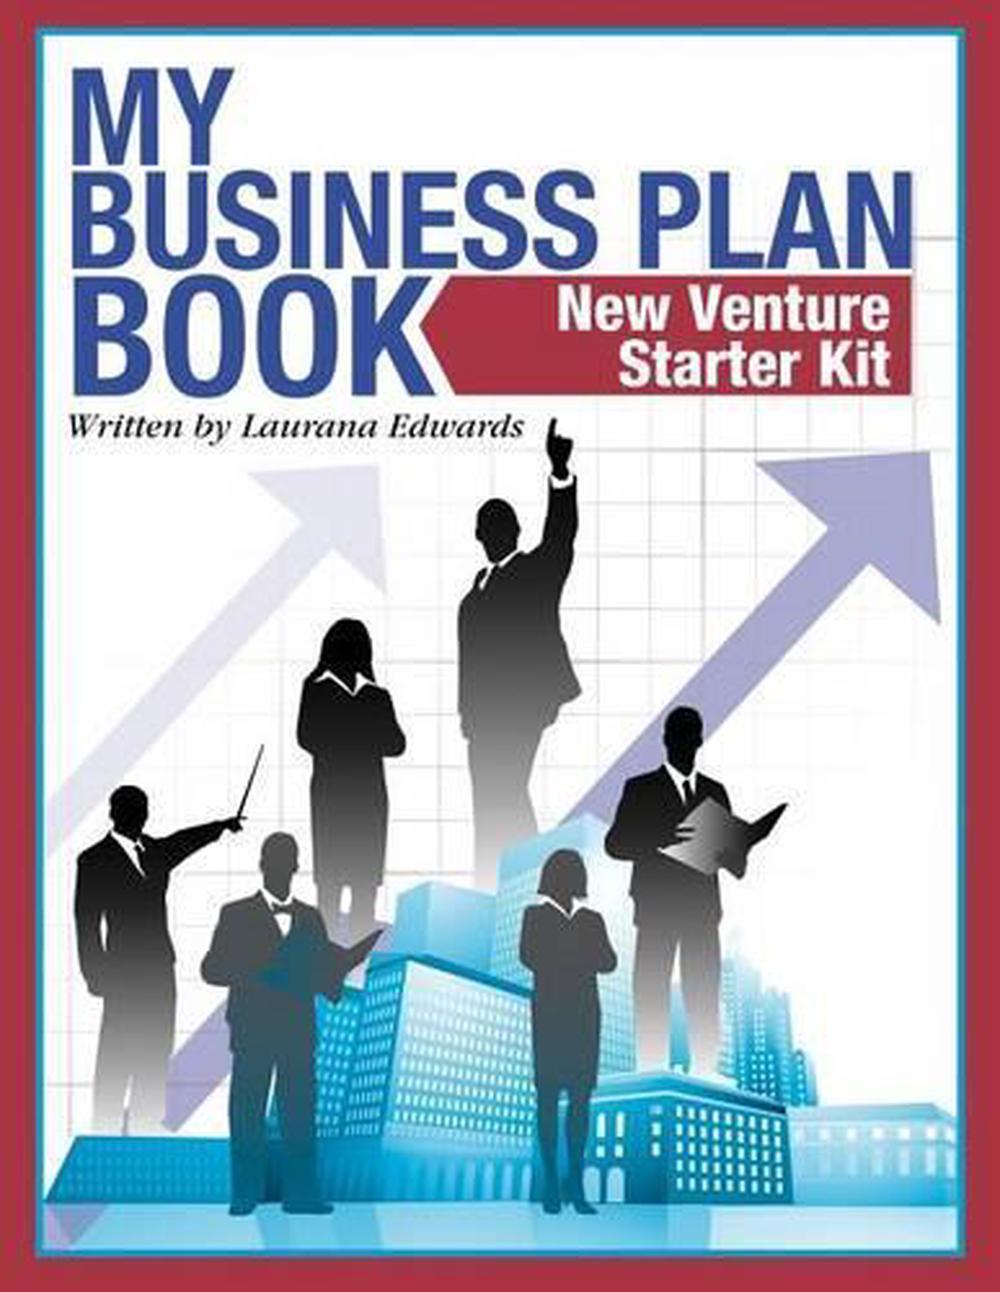 successful business plan book